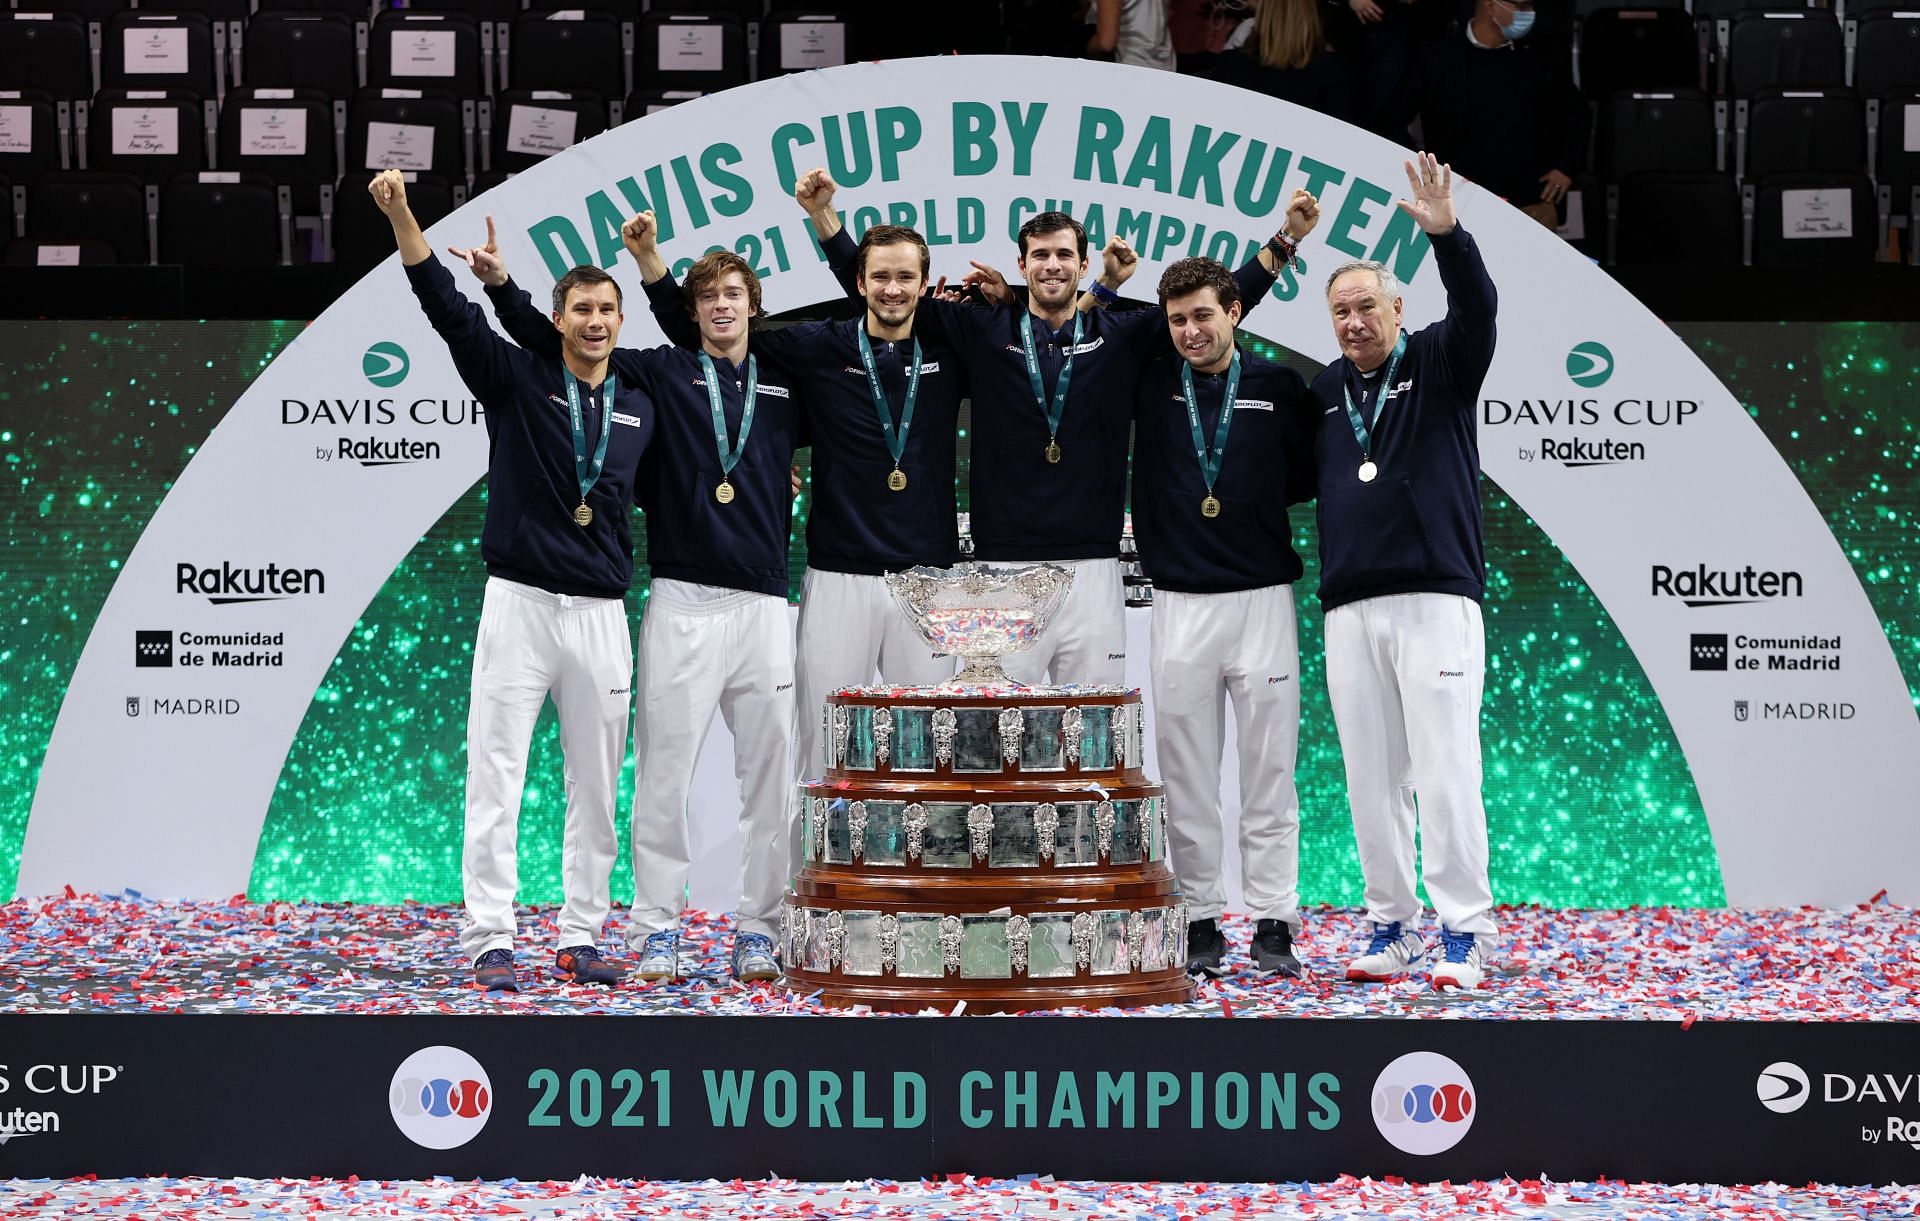 The Russian Tennis Federation team celebrate winning the Davis Cup Finals 2021